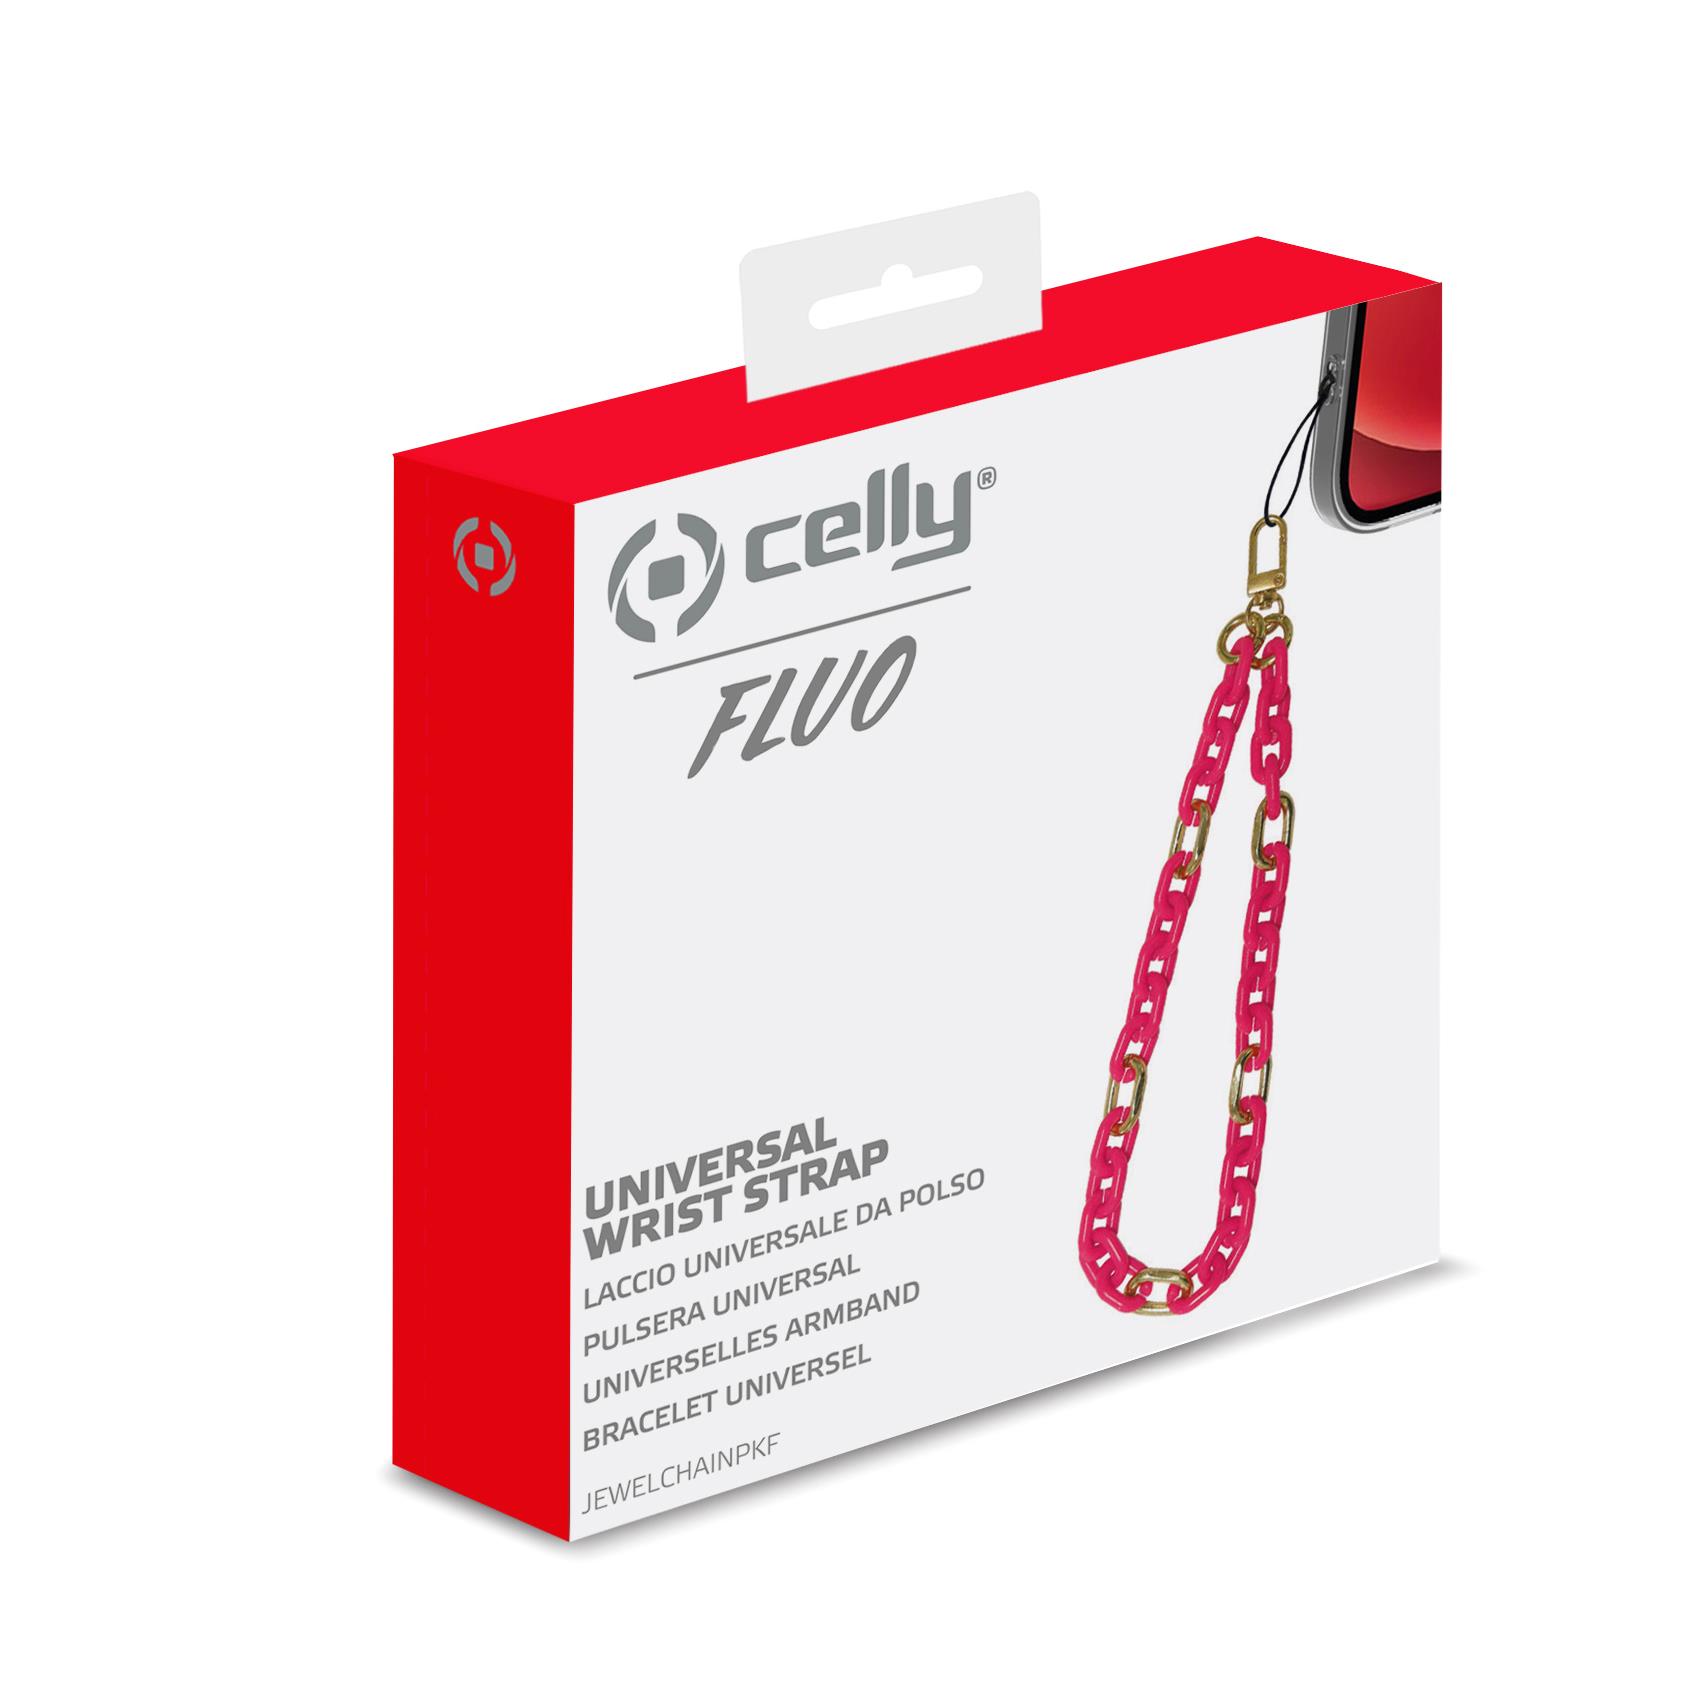 Jewel Chain Pink Fluo Celly Jewelchainpkf 8021735195788